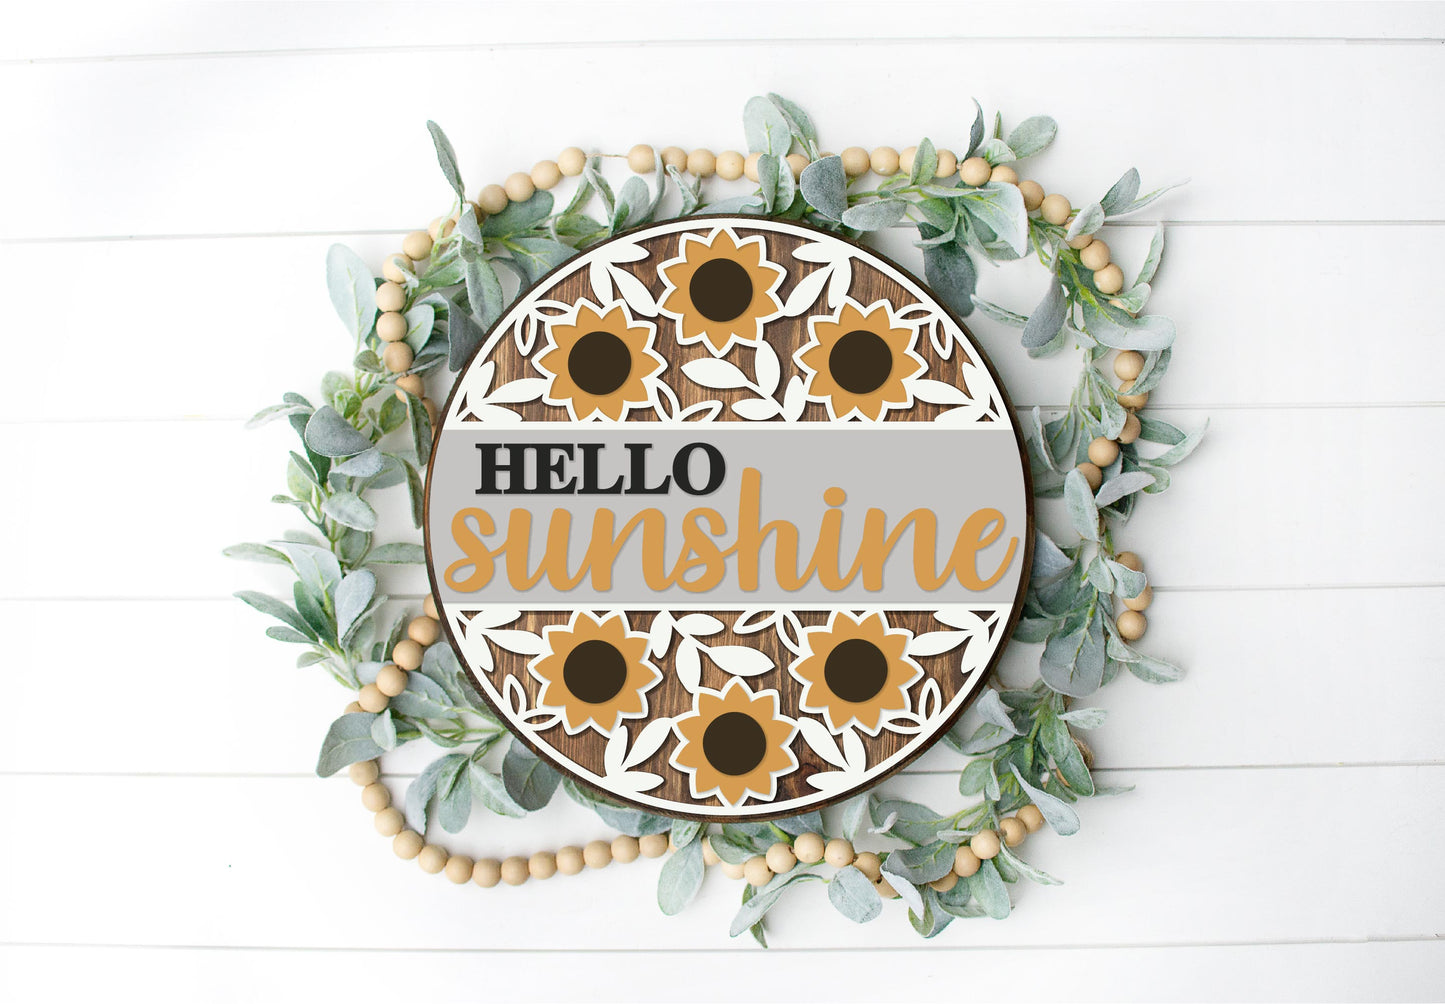 Hello Sunshine sunflower door sign